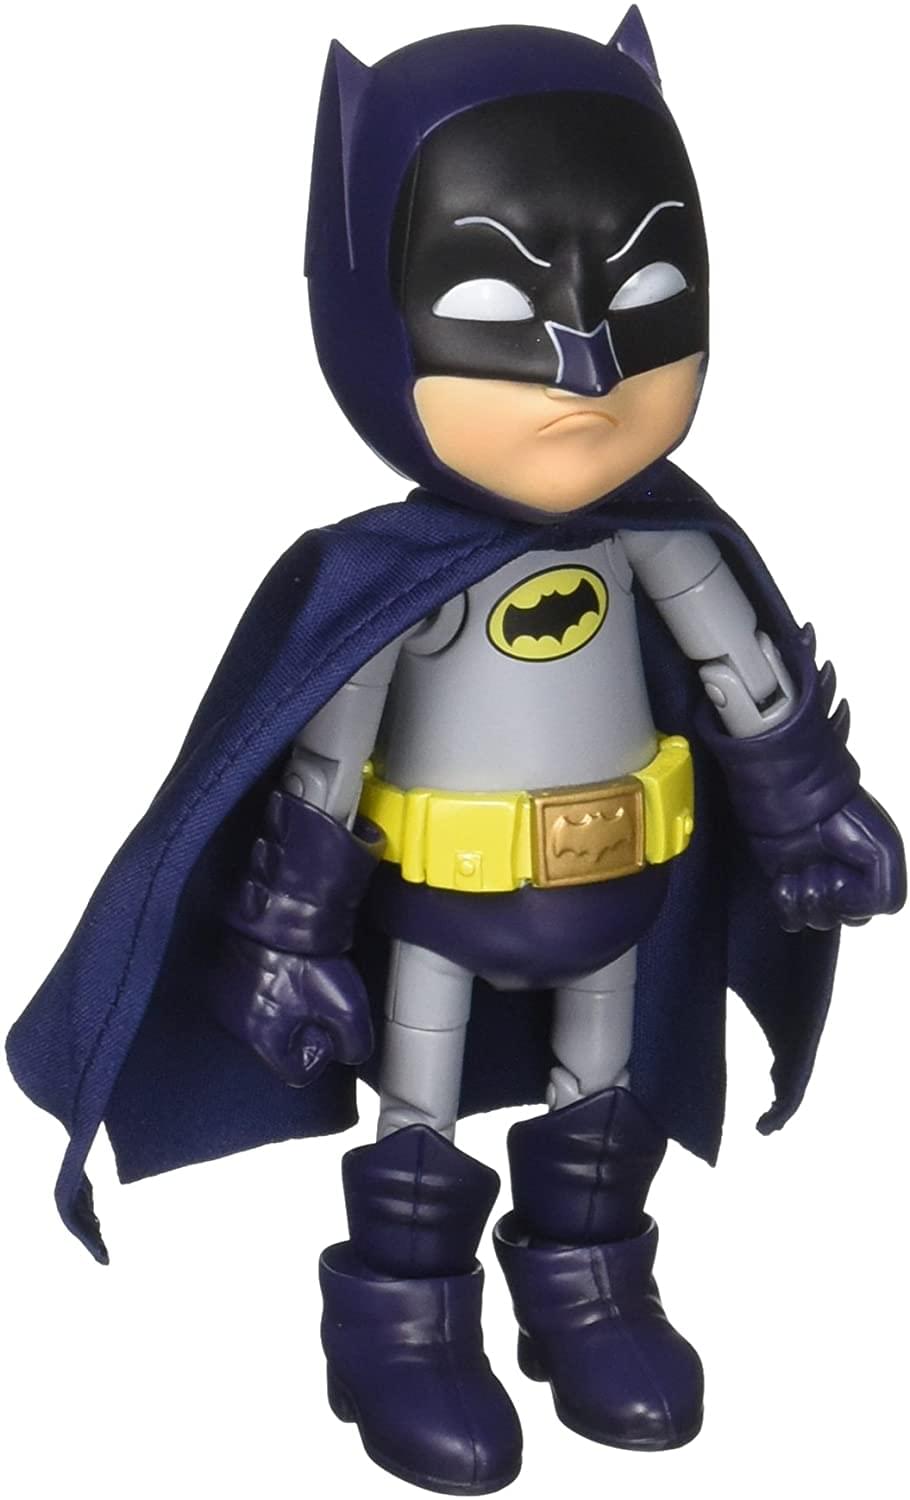 DC Comics Hybrid Metal Figuration Action Figure | 1966 Batman